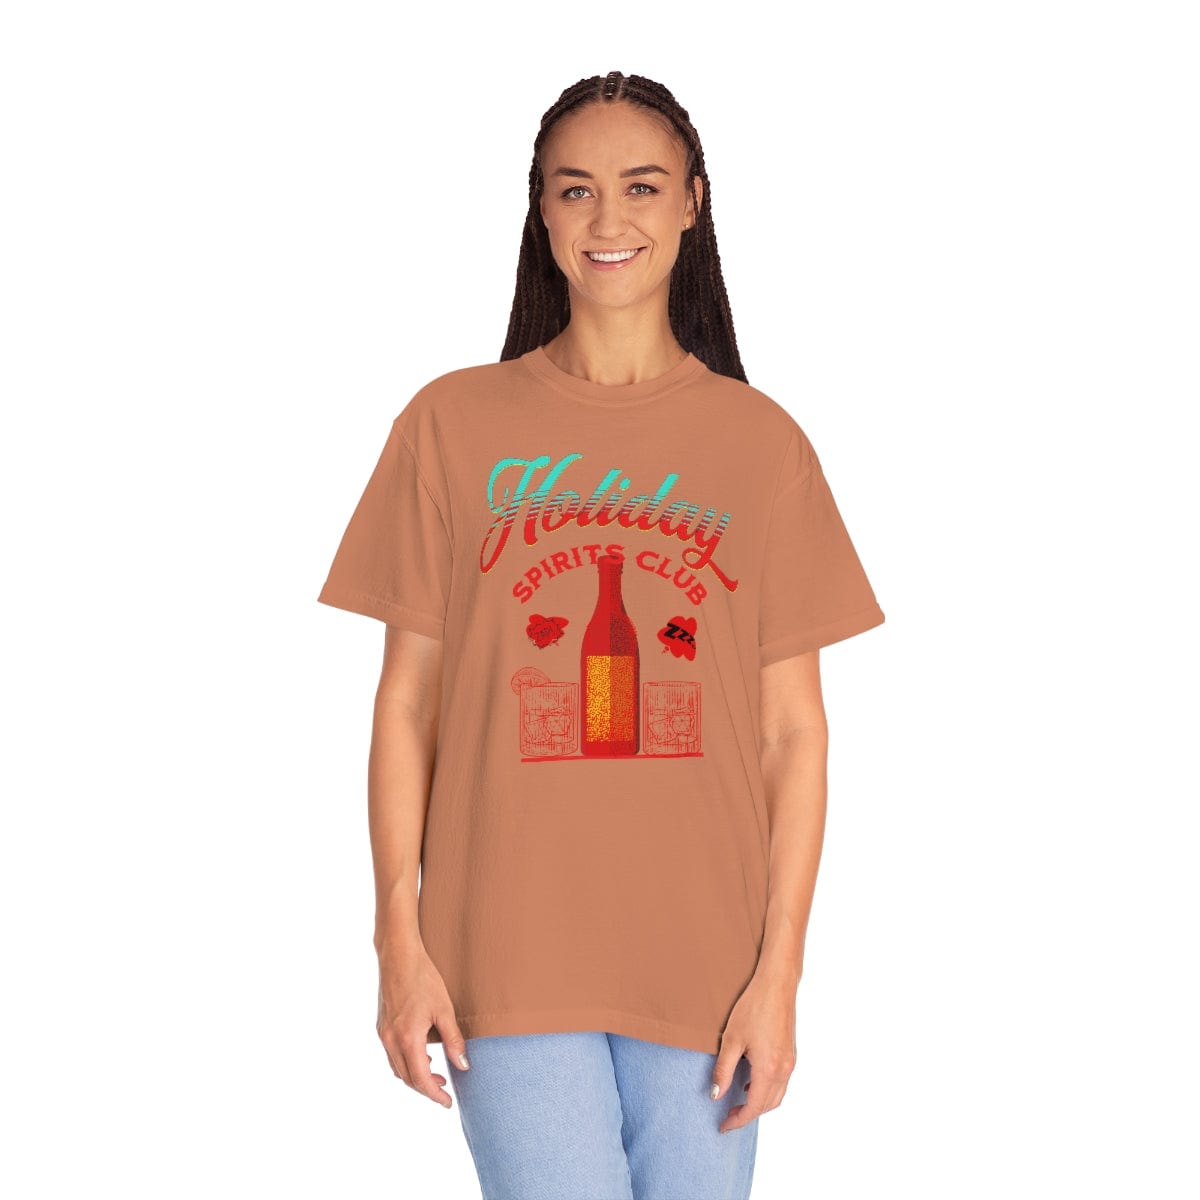 Holiday Spirits Club T-Shirt For Women Girl